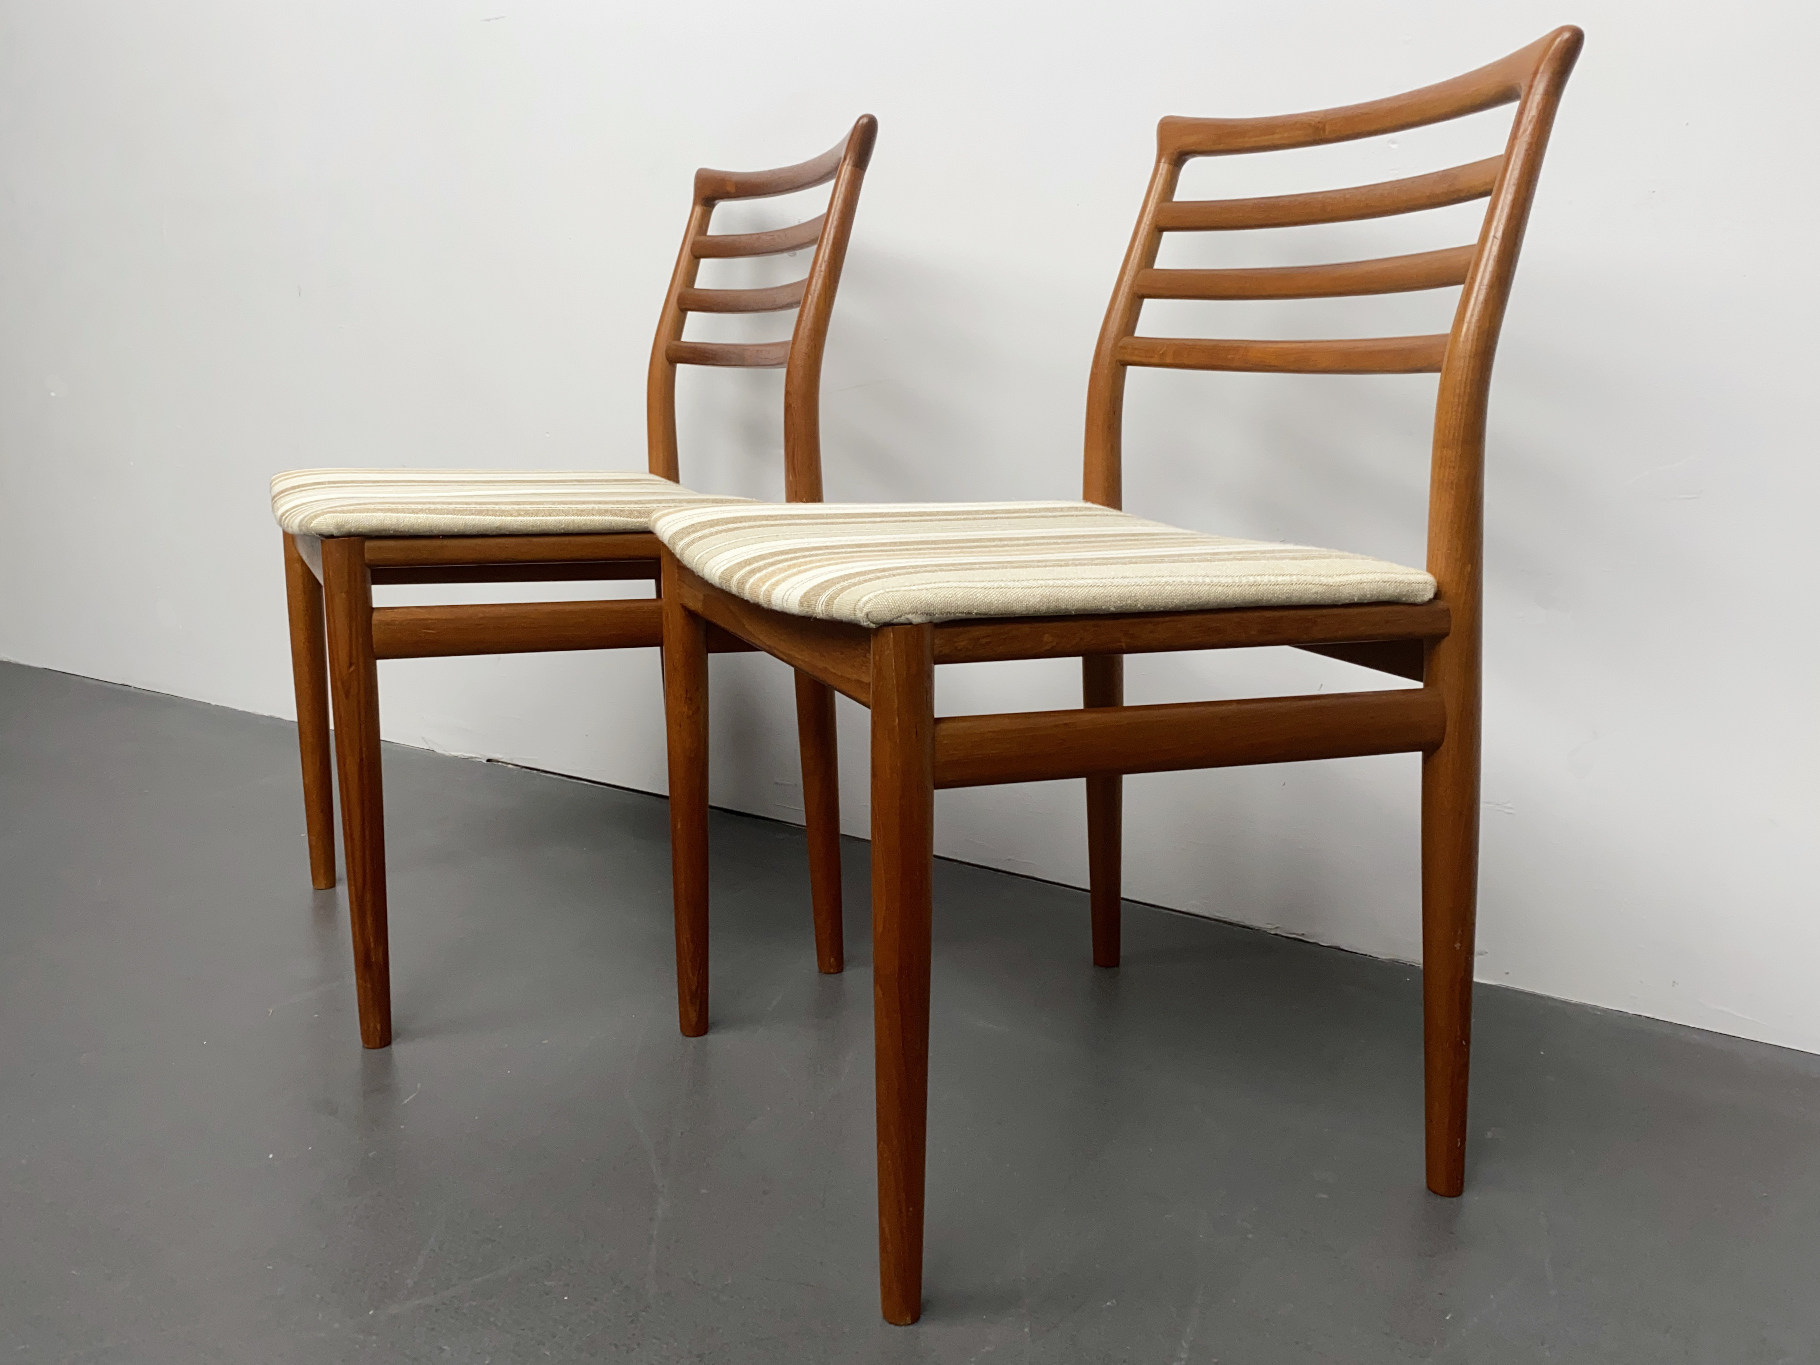 Pair of Dining Chairs, Teak Wood, by Erling Torvits for Soro Stolefabrik, Denmark, 1960s